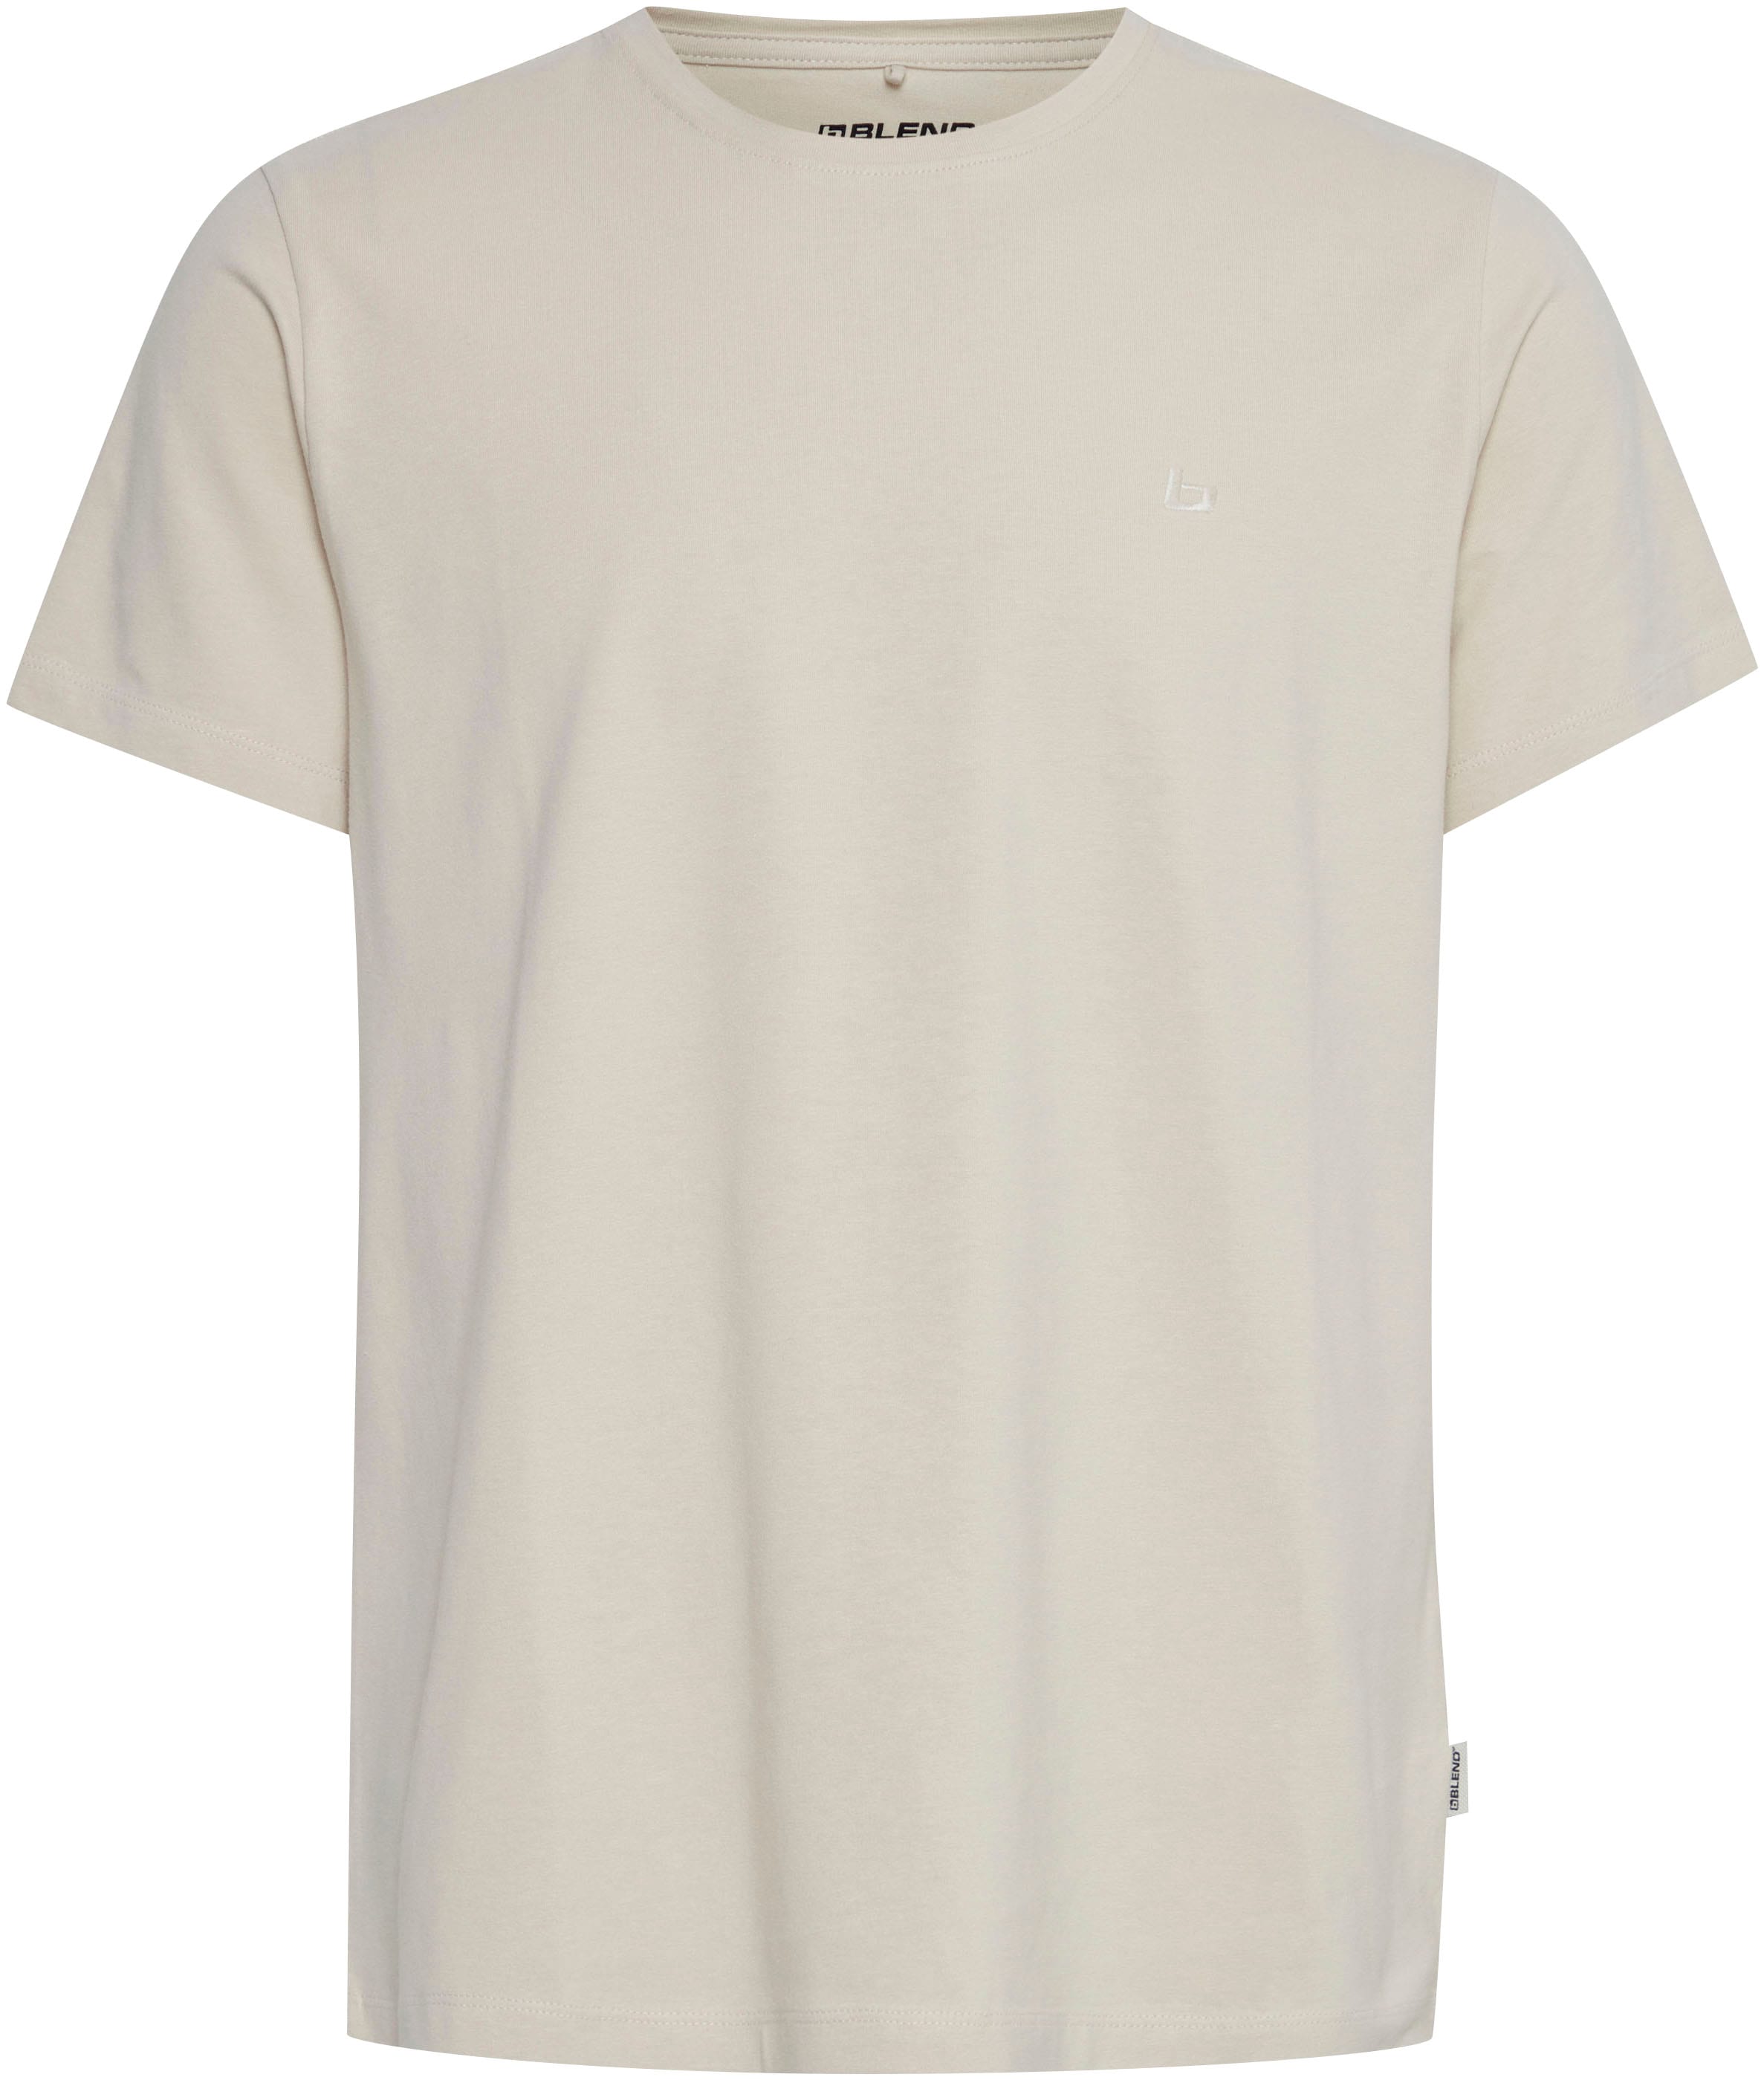 »BL online BHDinton crew« Blend kaufen T-shirt 2-in-1-Langarmshirt